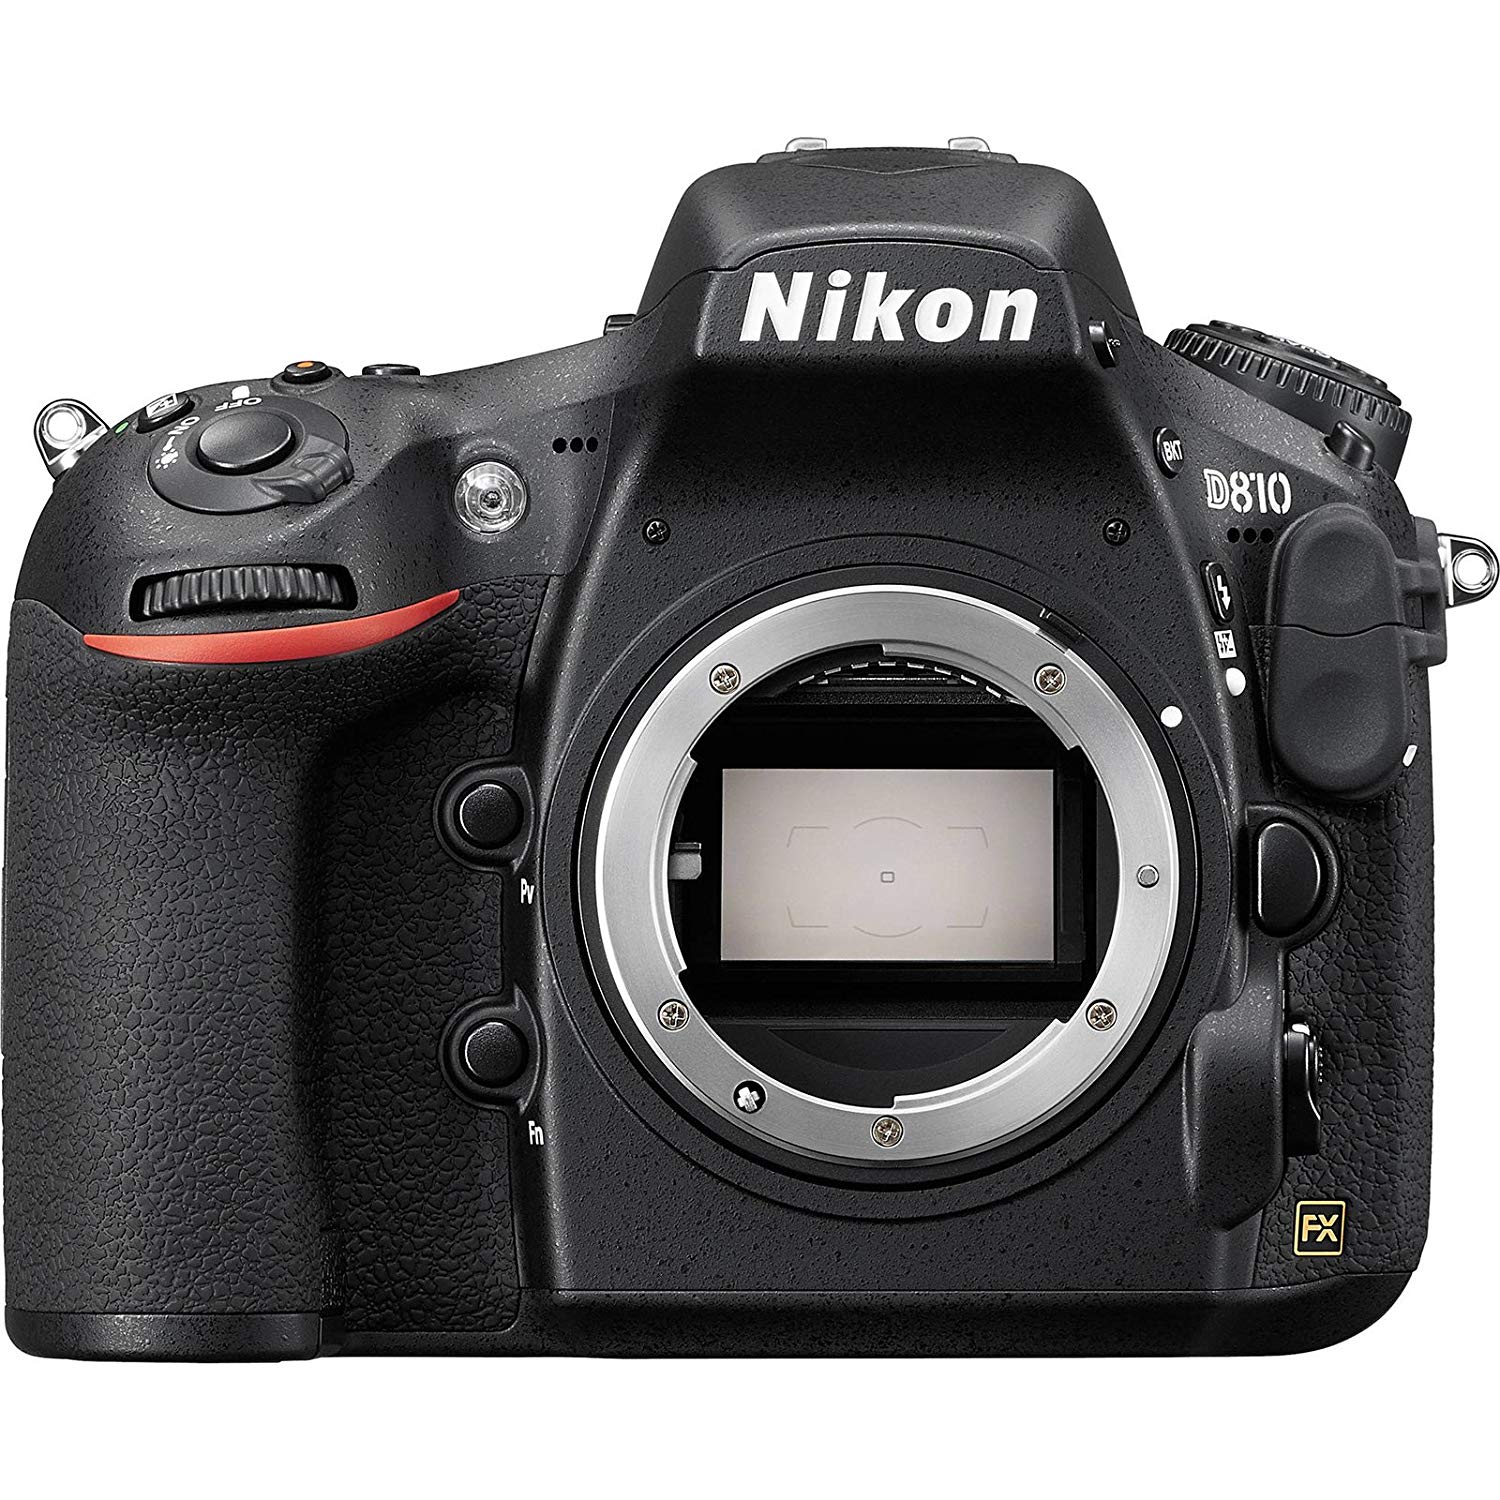 Nikon D810 디지털 SLR 카메라 본체 (리퍼브 제품 인증)